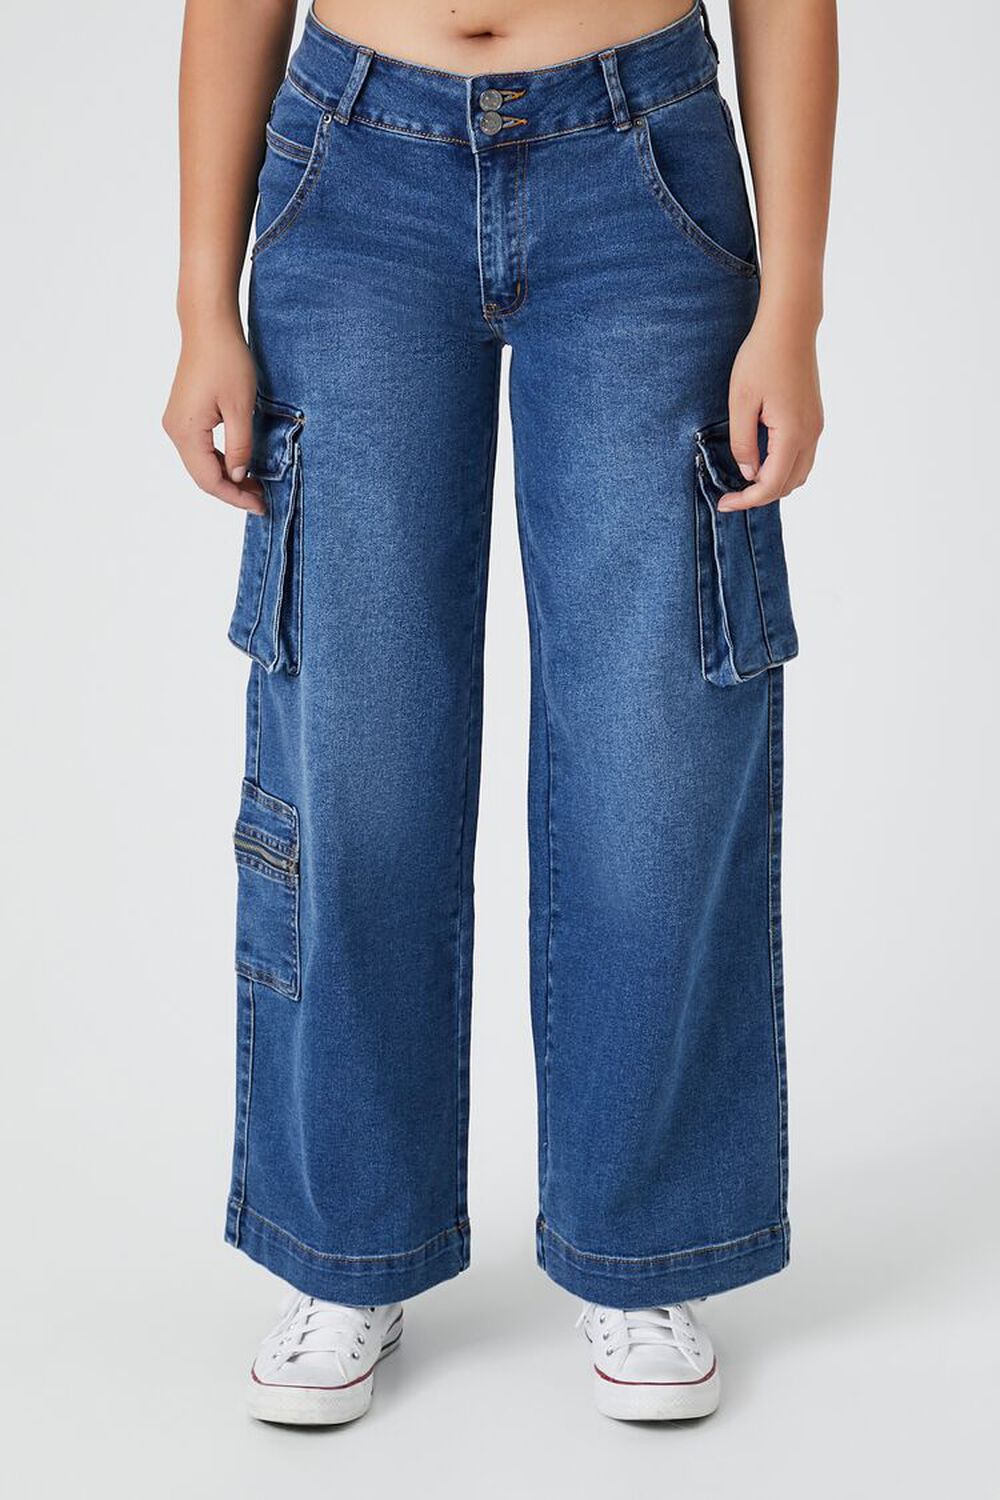 Jeans Mujer Foster Wild Leg Cargo